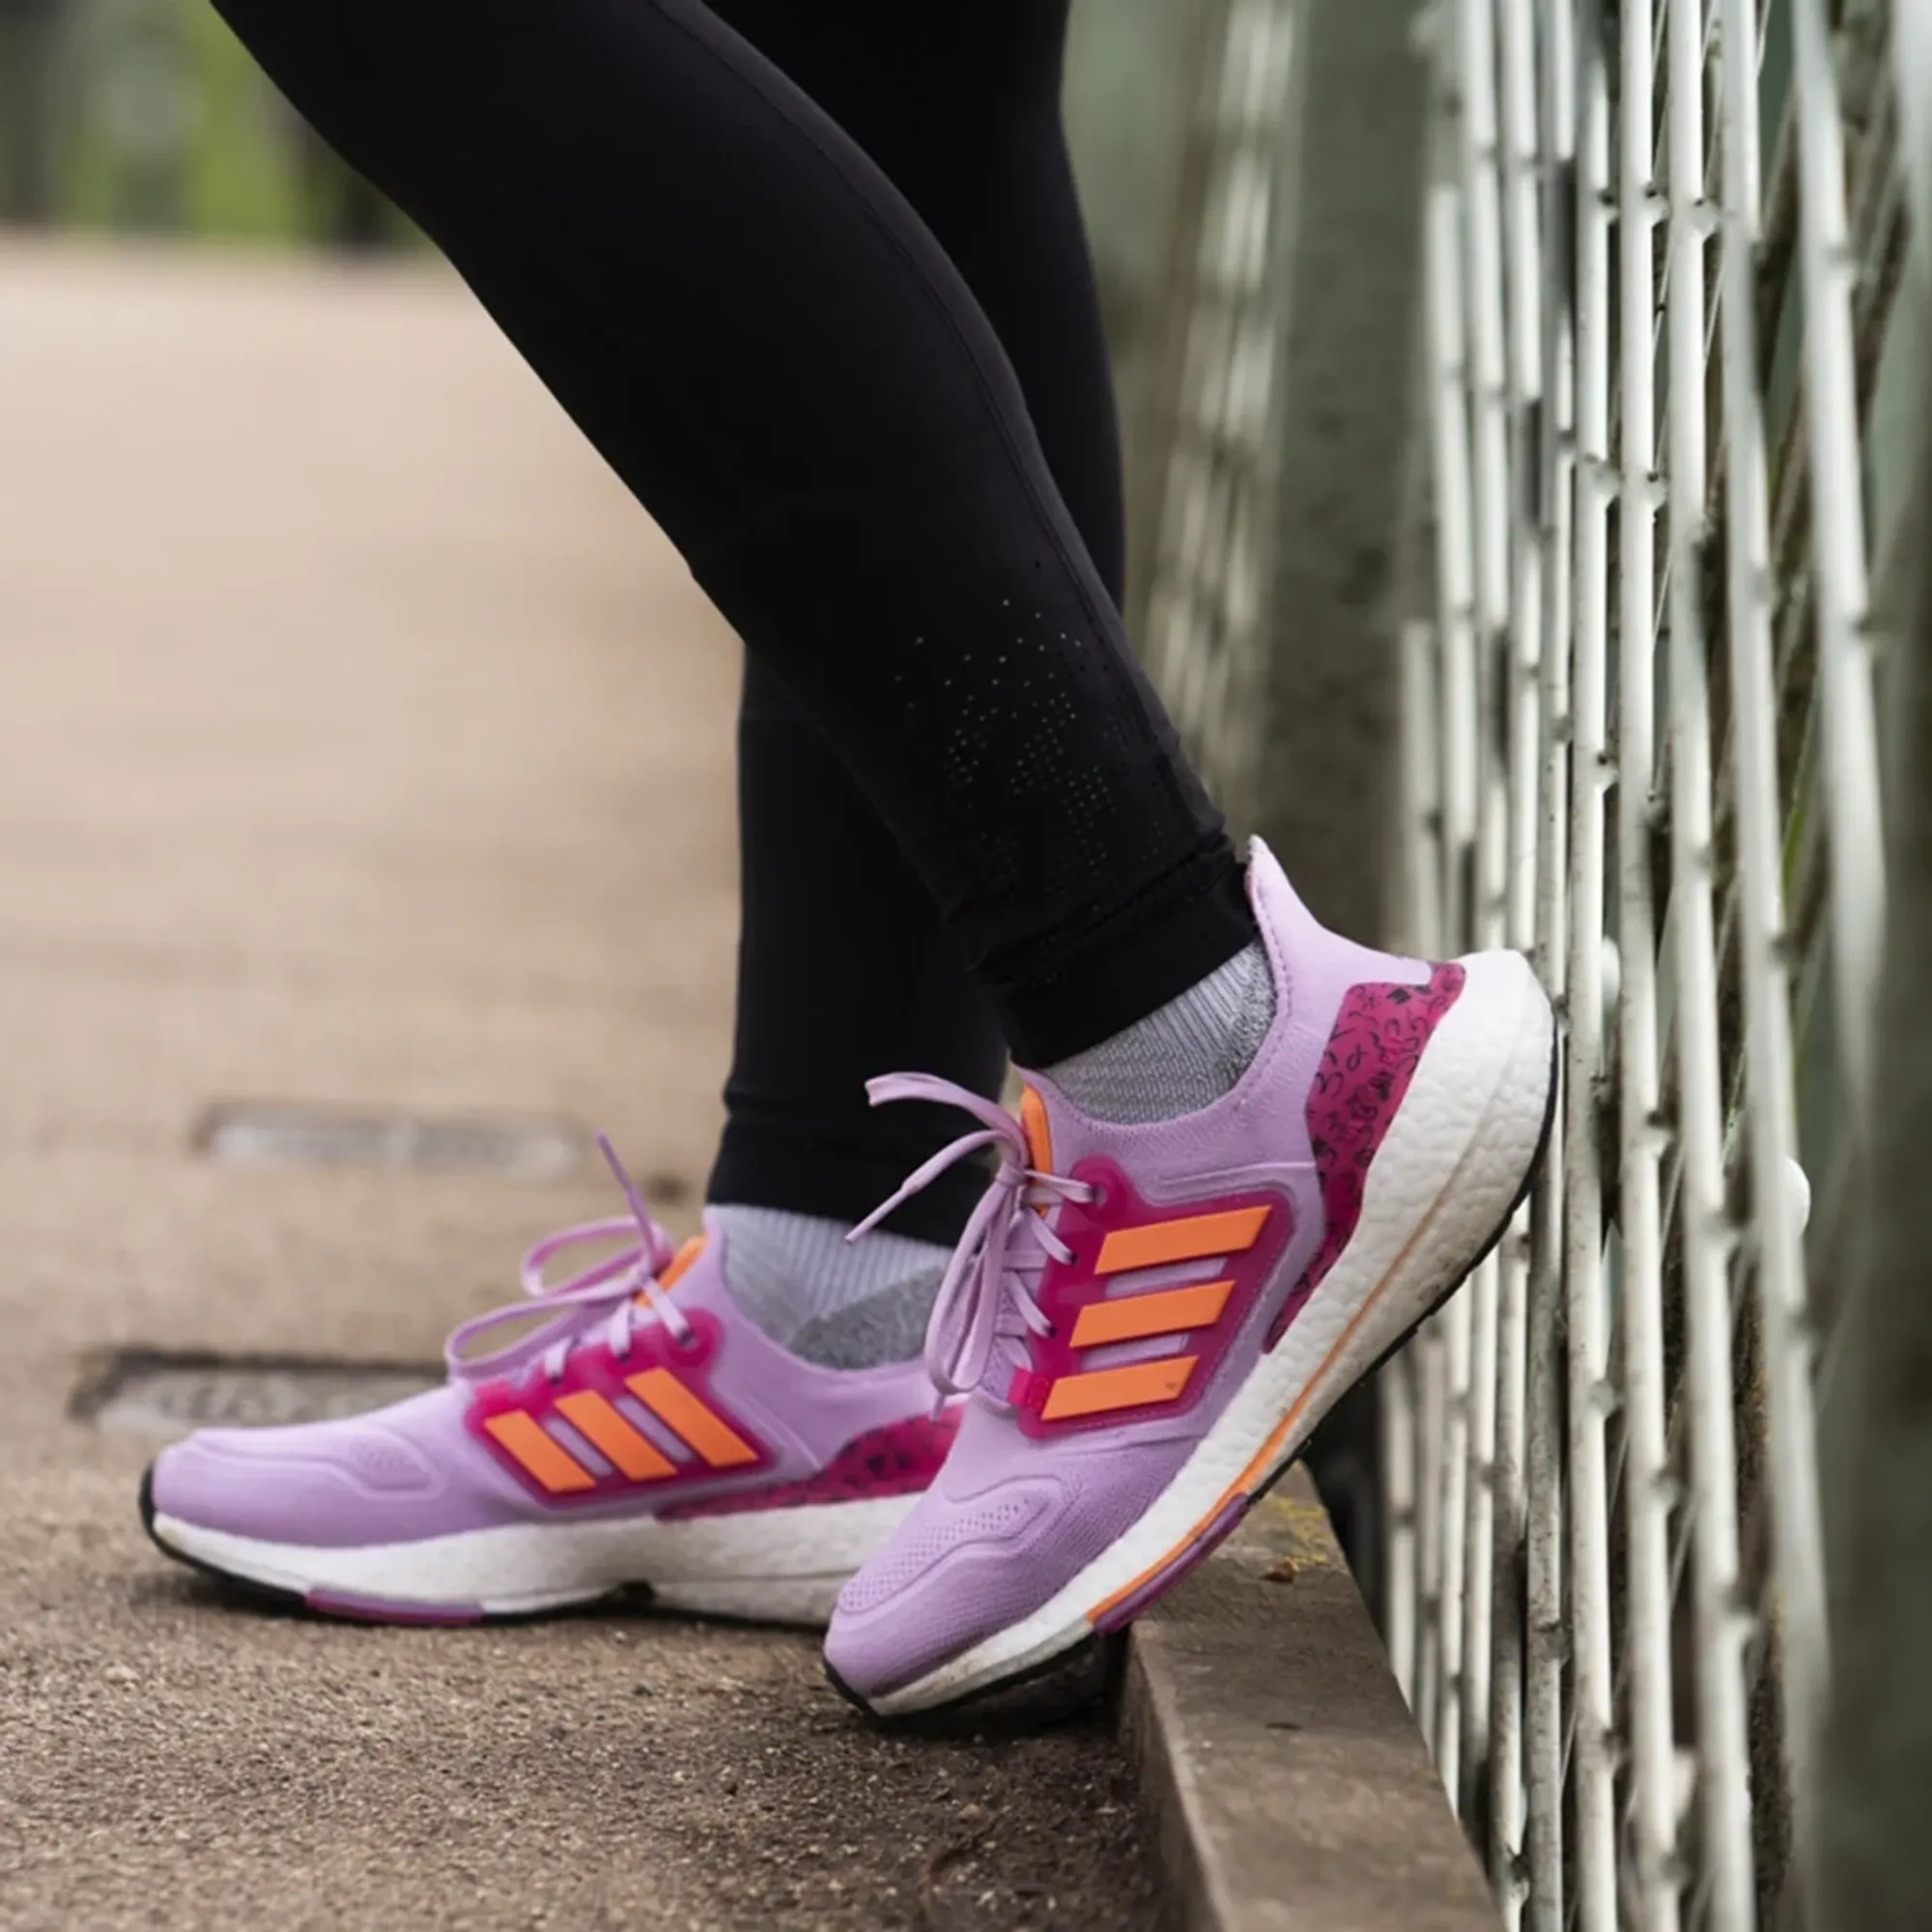 Adidas Women's UltraBoost X Running Shoes Review